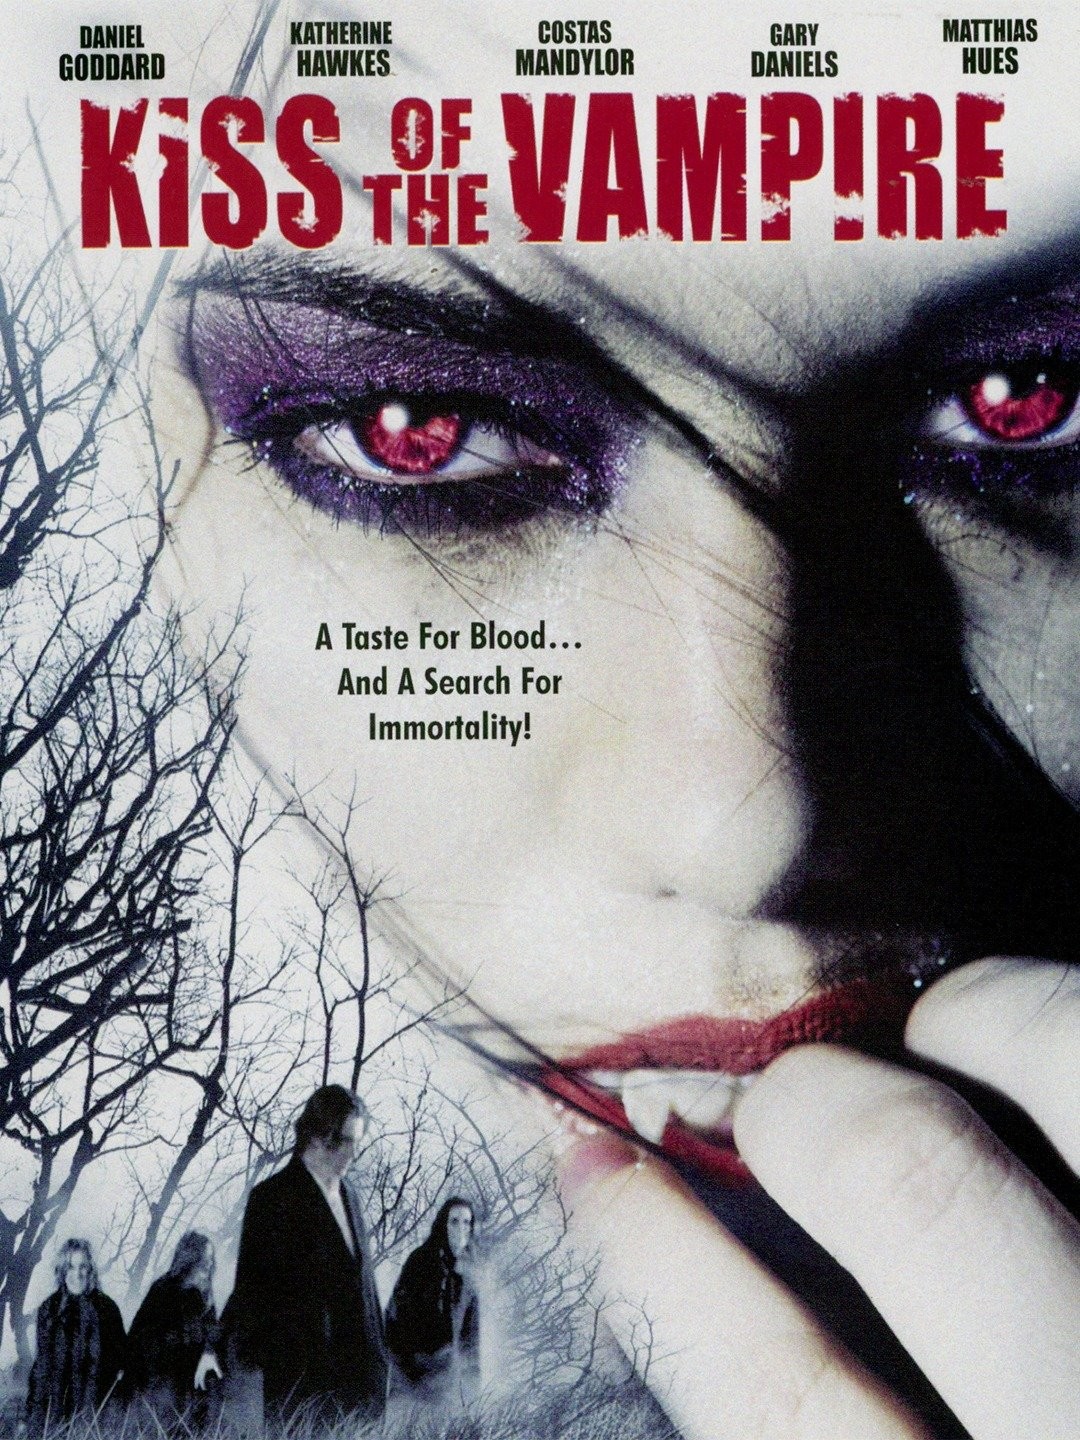 My Favorite Vampire by Alex Gordon